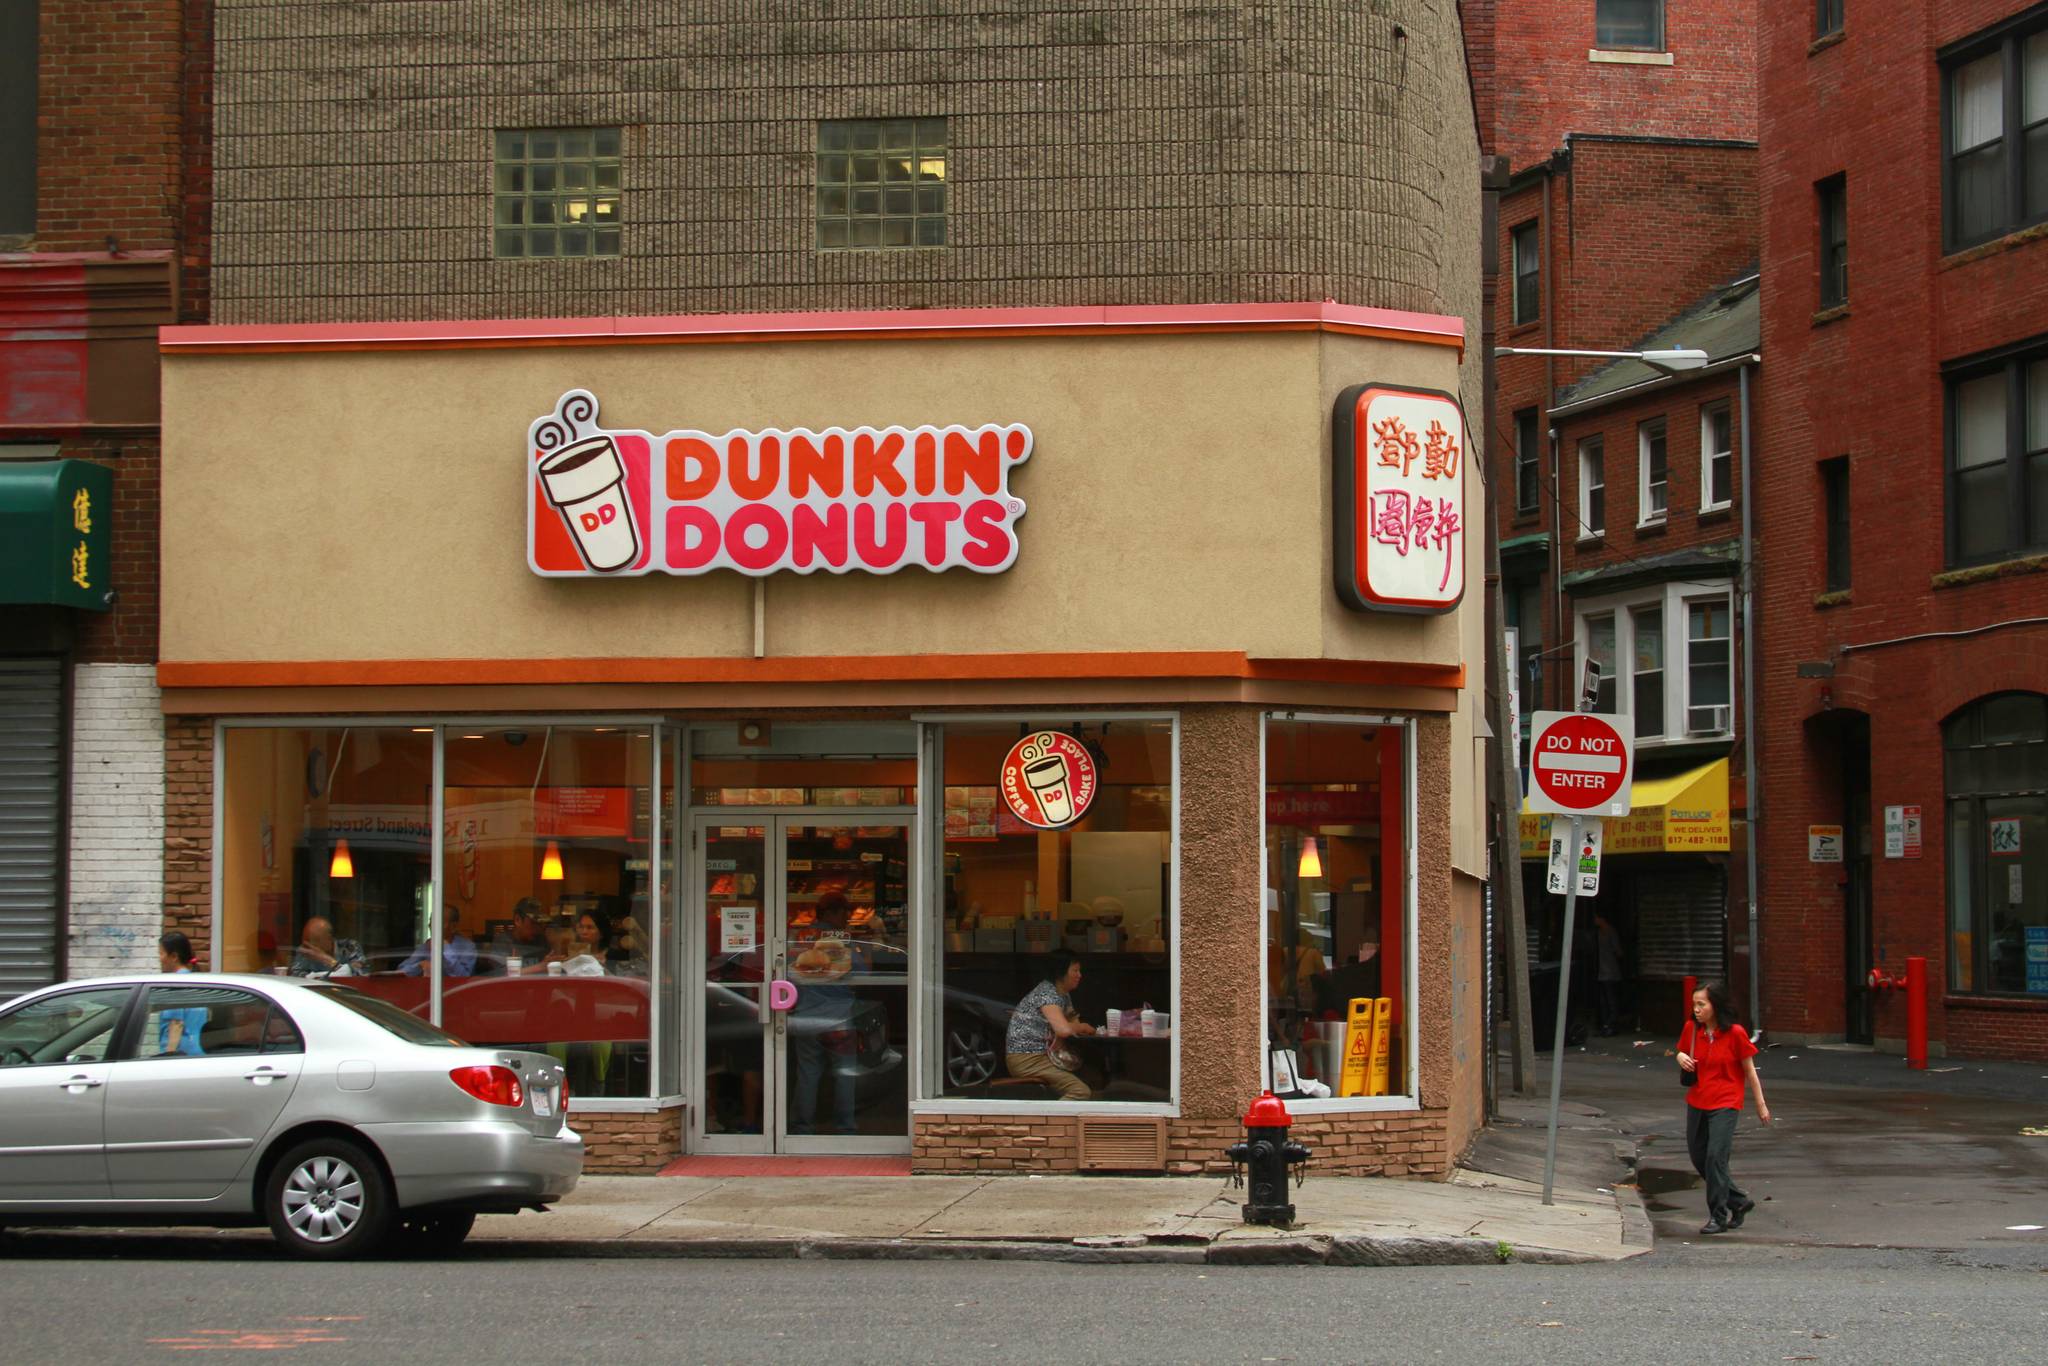 Dunkin’ Donuts go on-demand